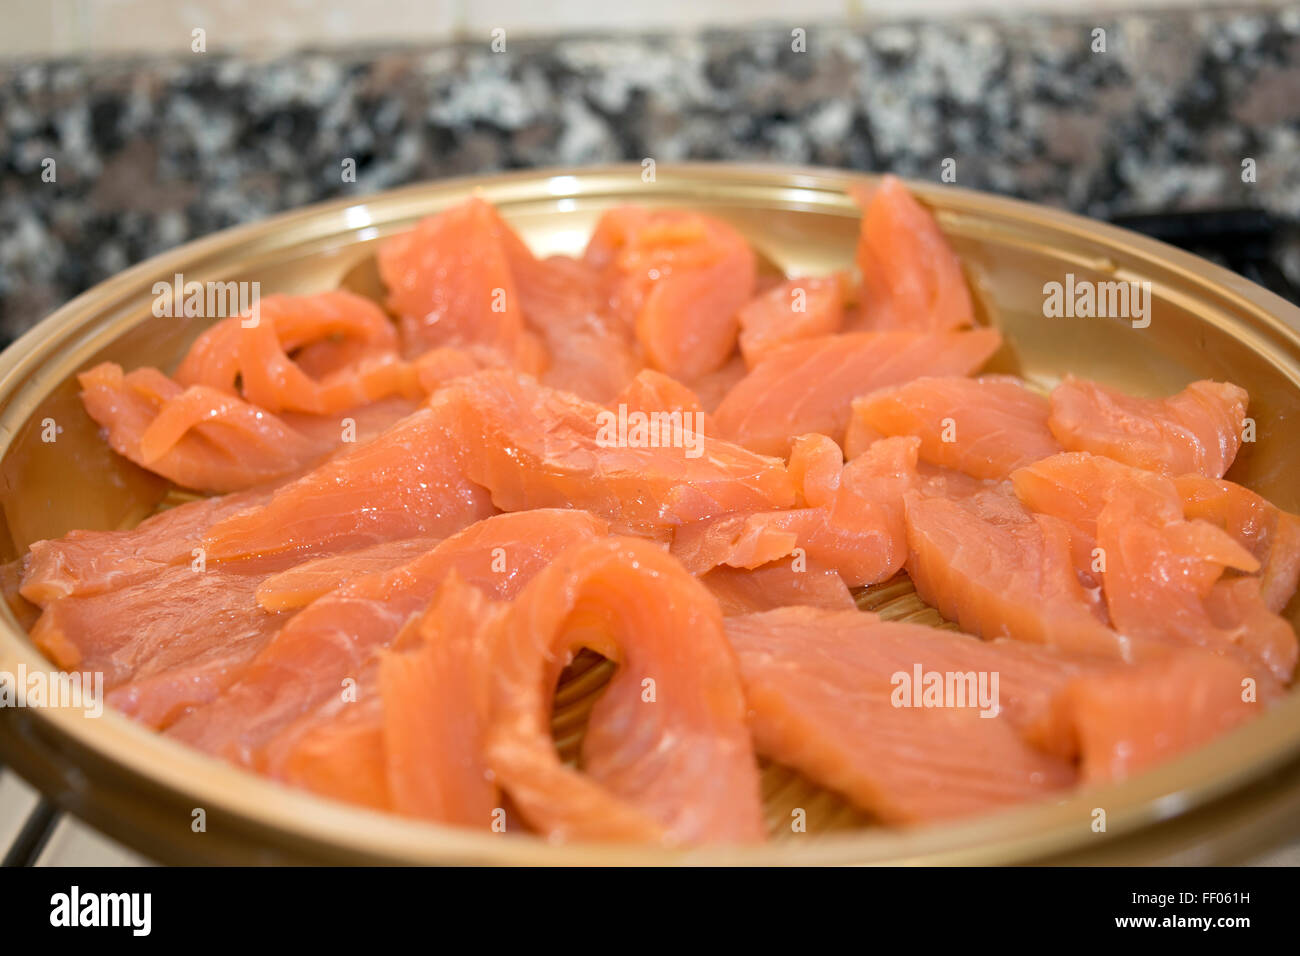 slices of smoked Norwegian salmon for appetiser Stock Photo